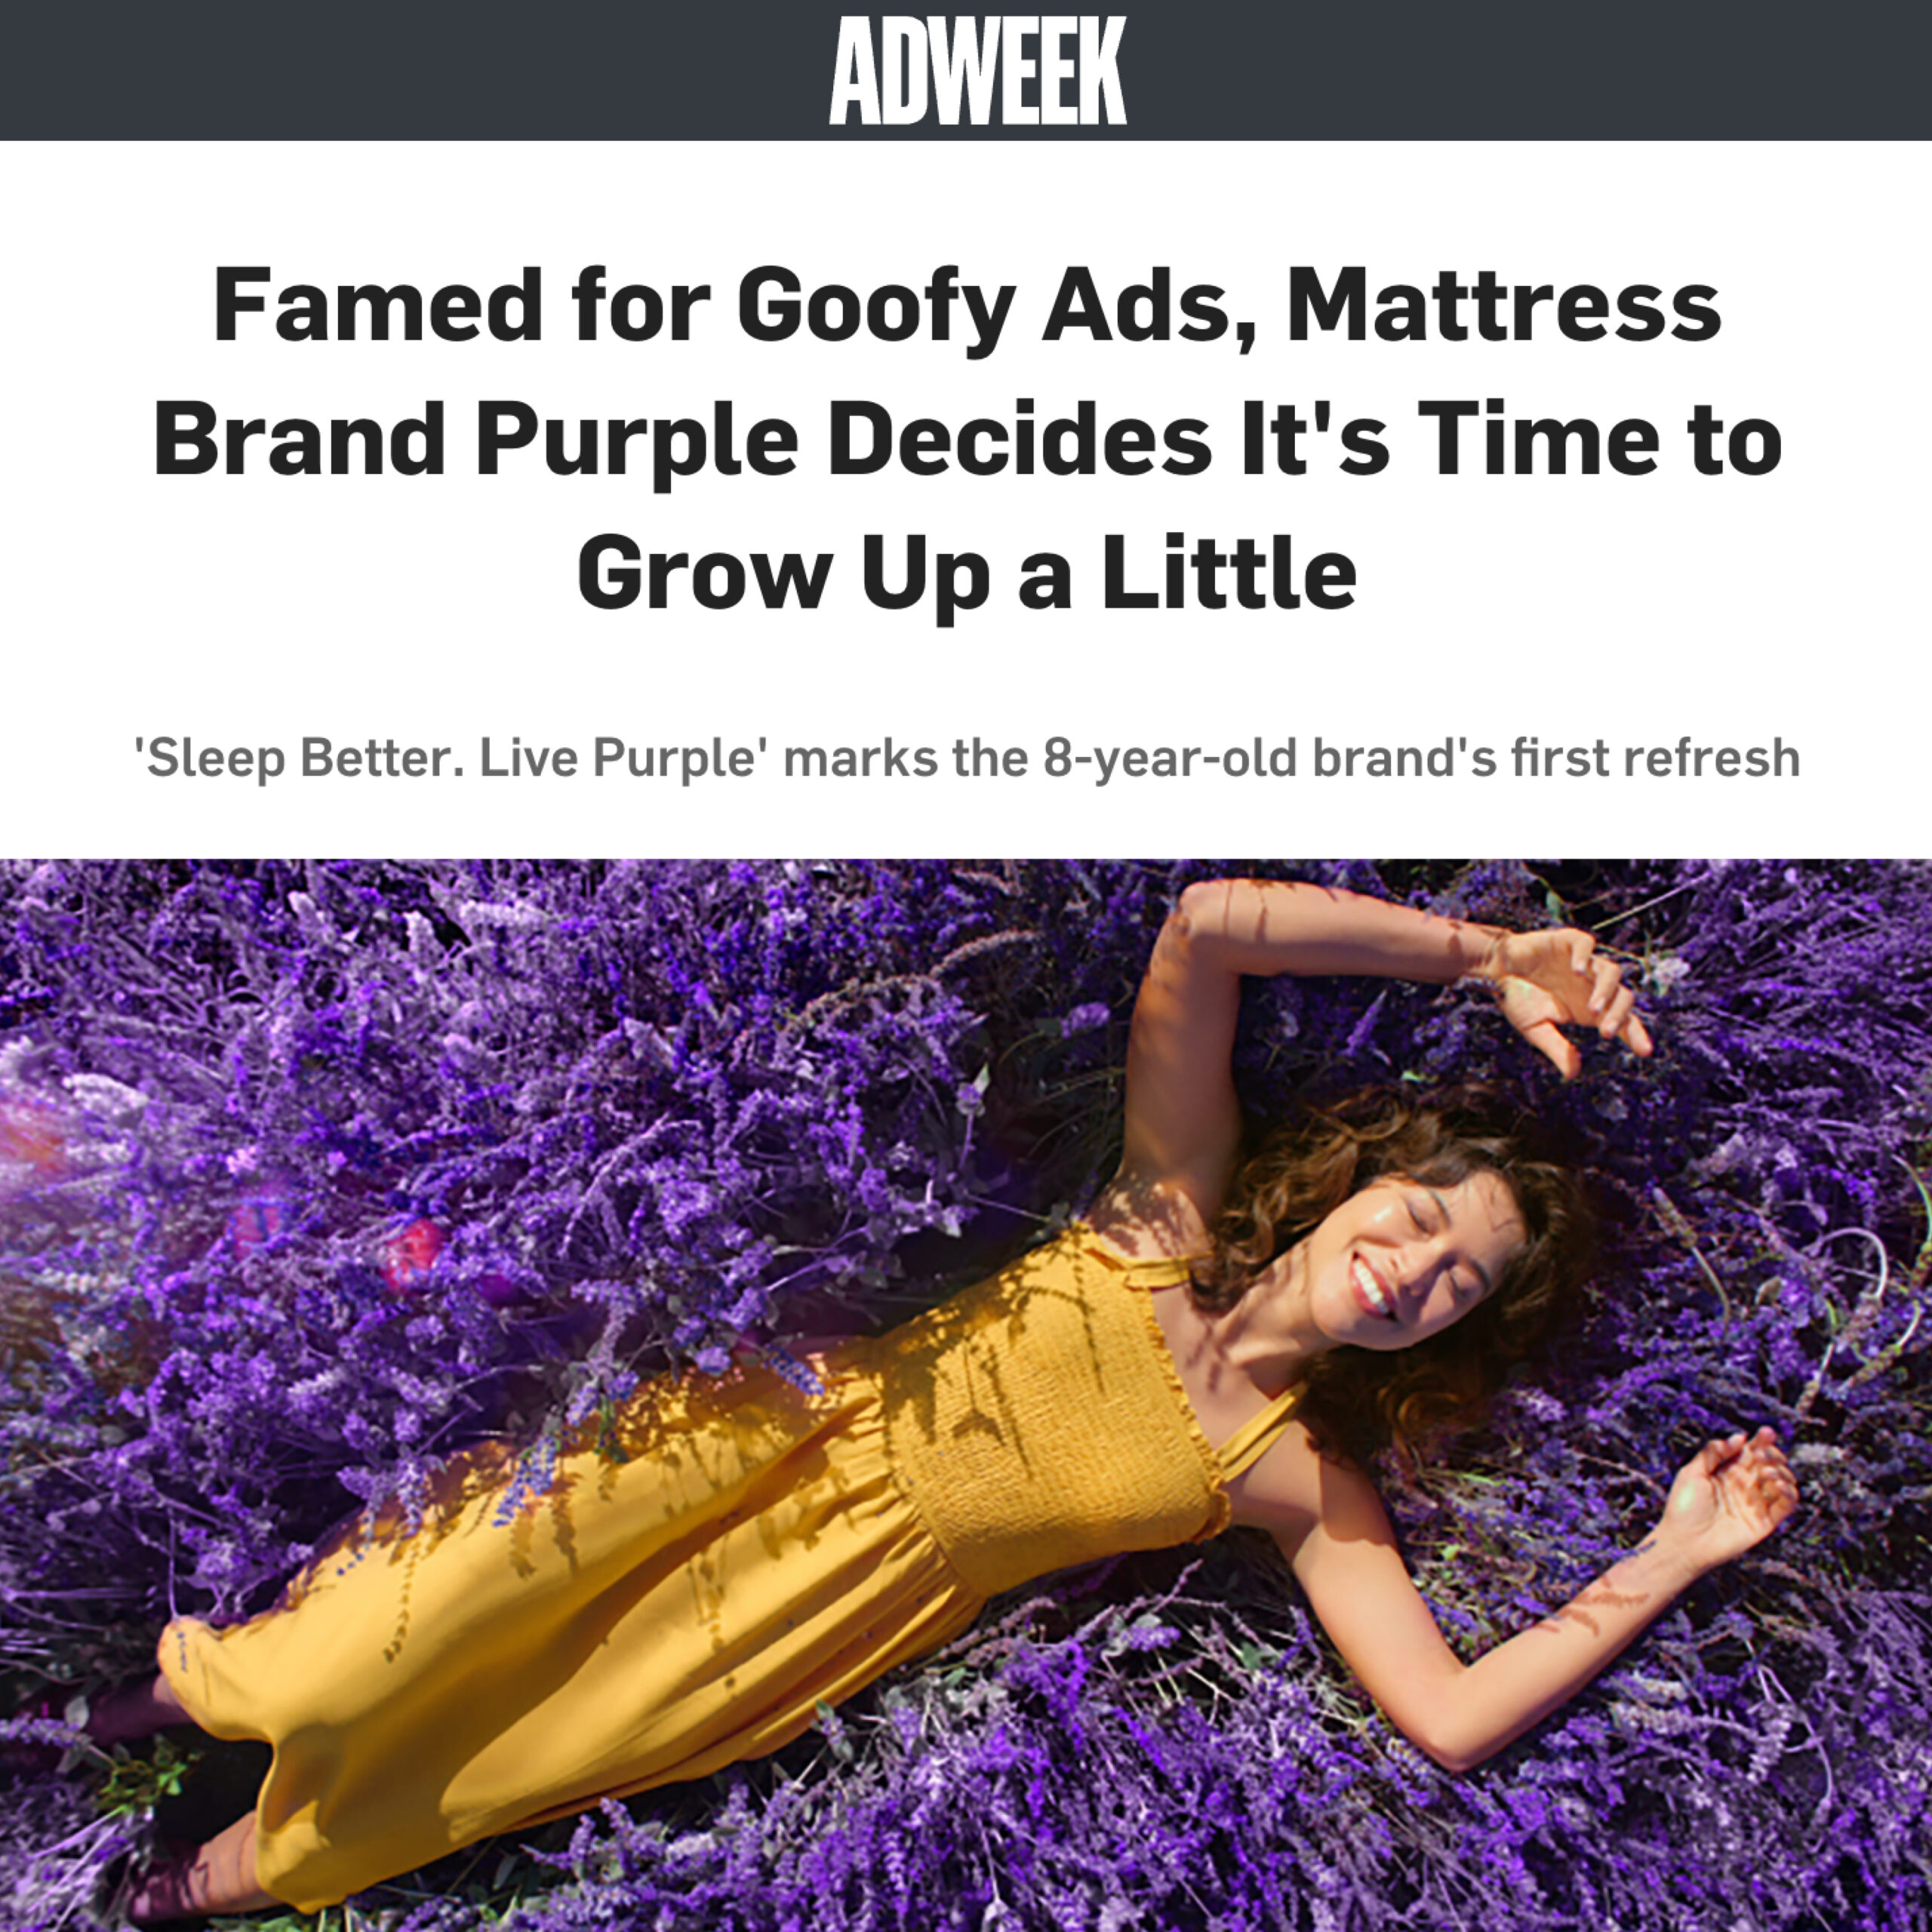 AdWeek article on Purple, image